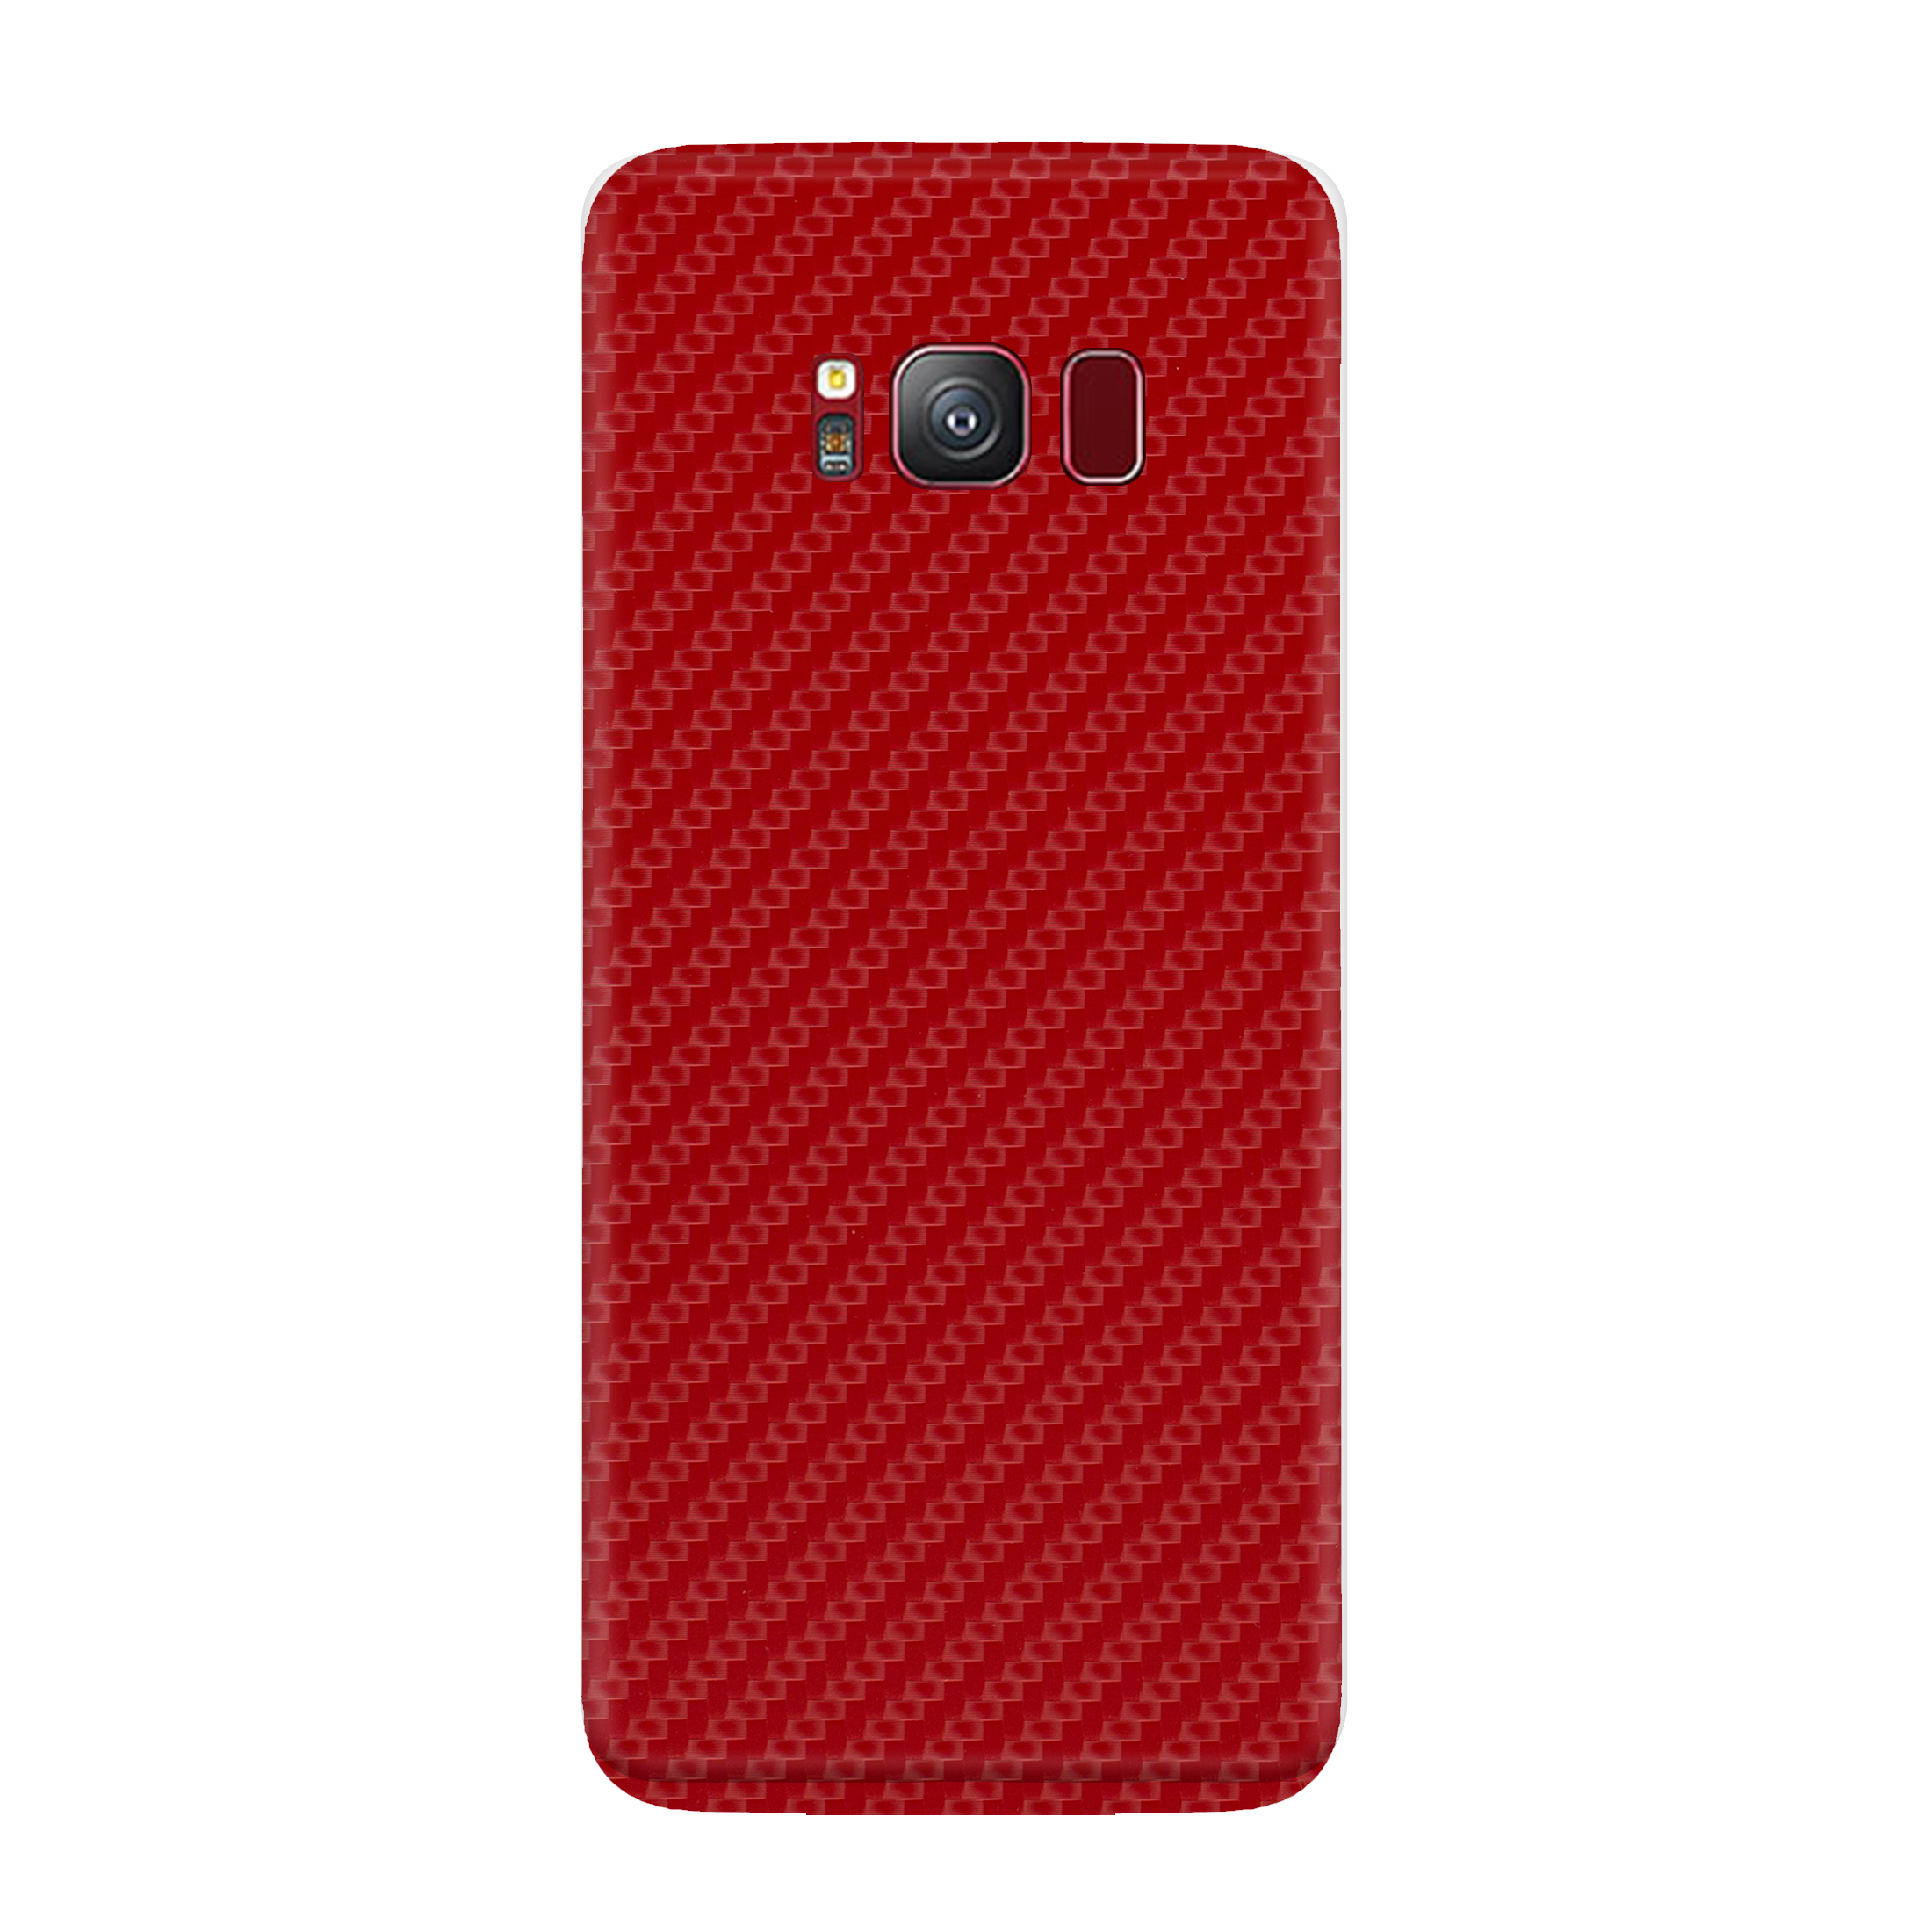 Carbon Fiber Red Skin for Samsung S8 Plus